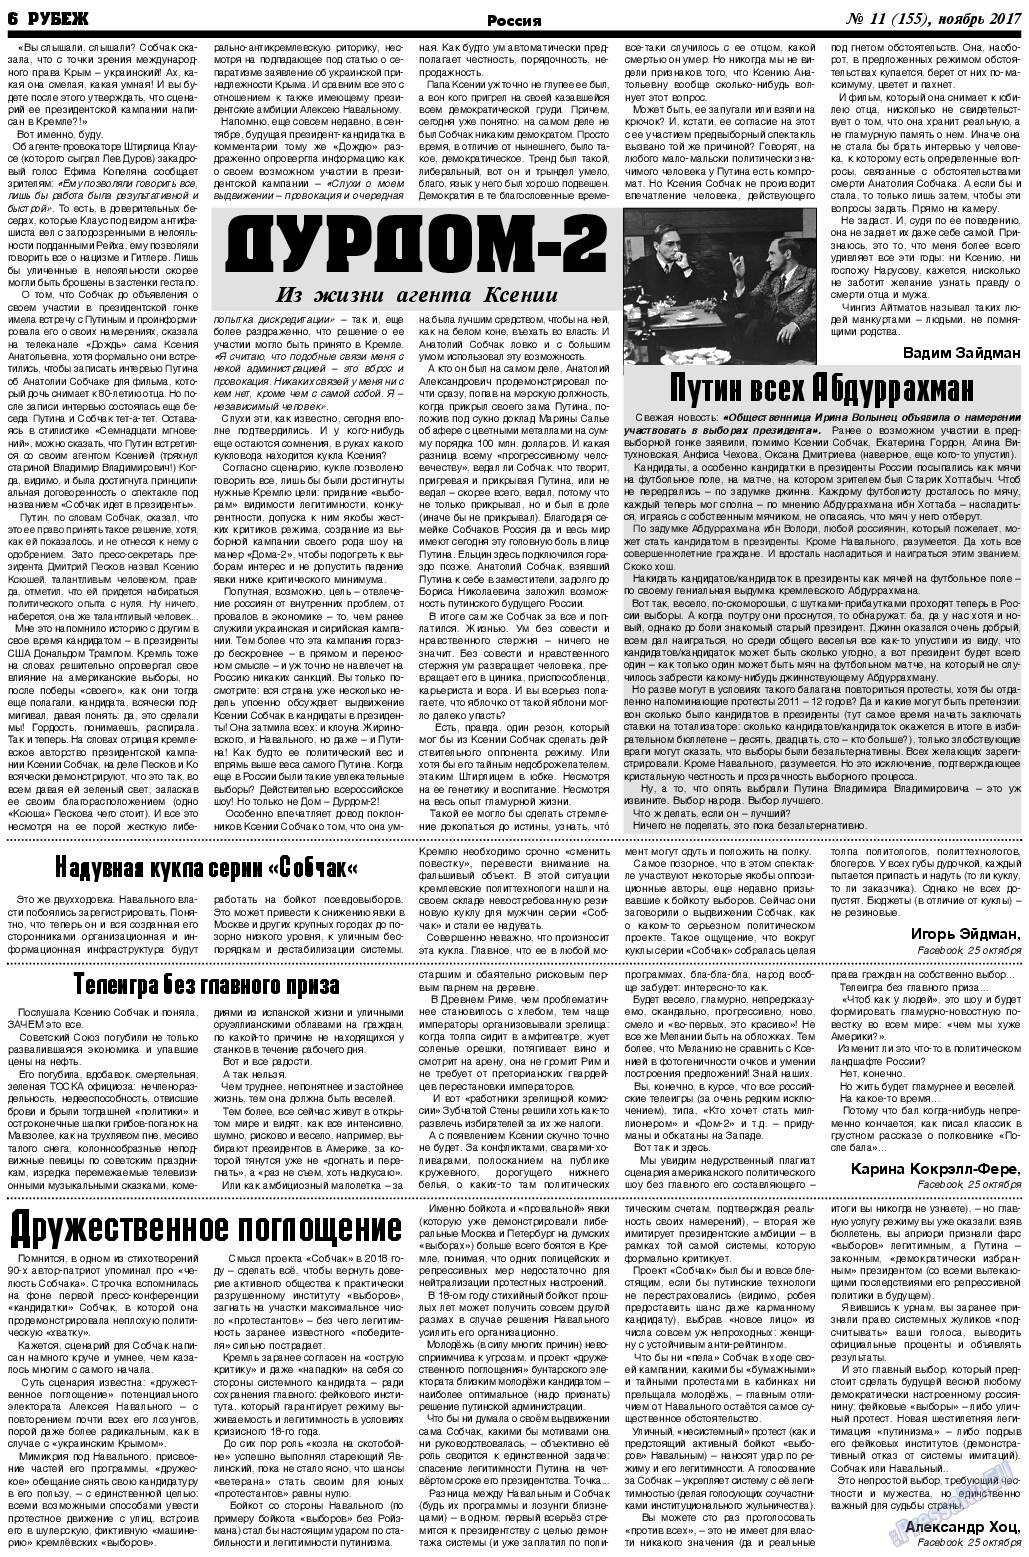 Рубеж, газета. 2017 №11 стр.6